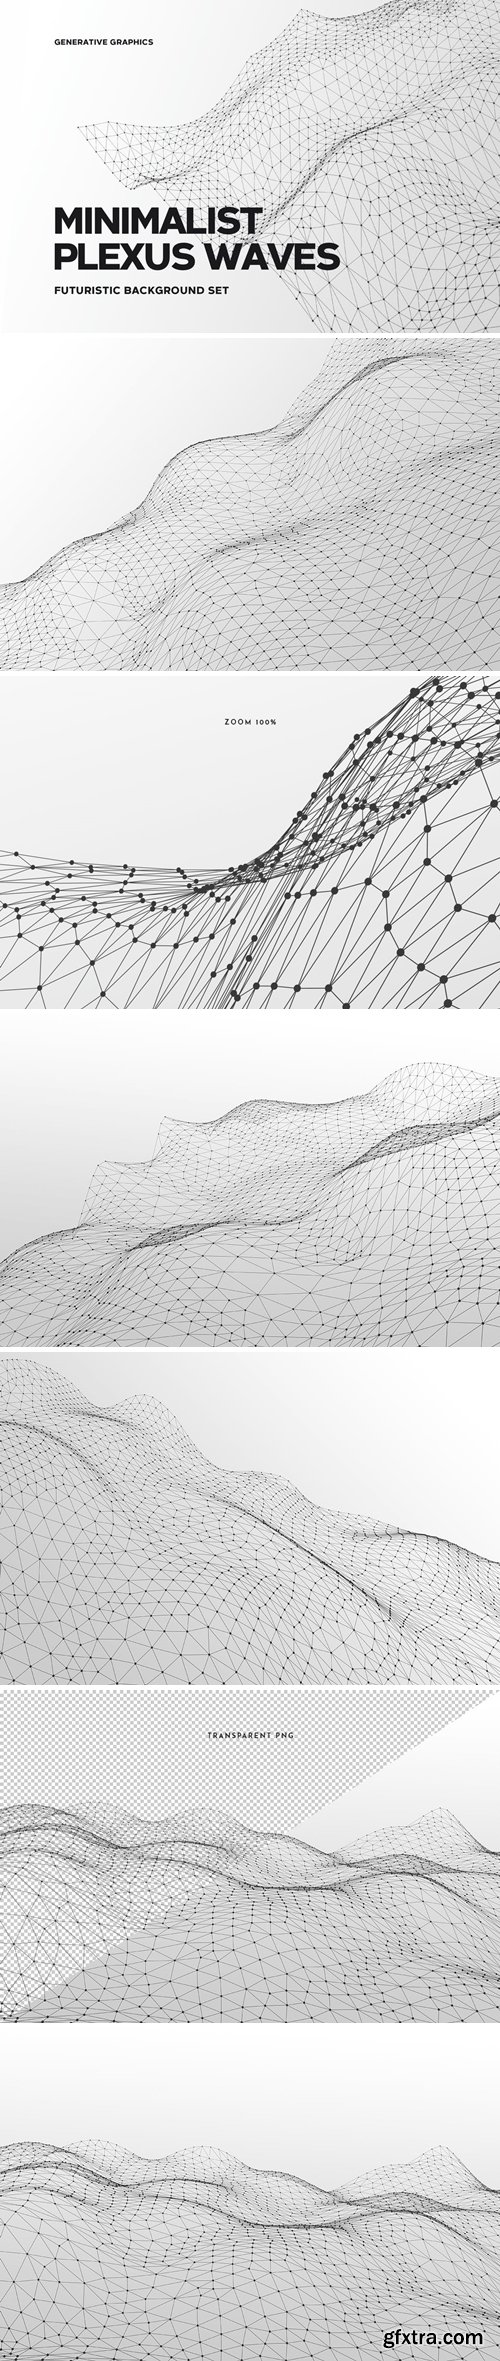 Minimalist Plexus Waves Background Set